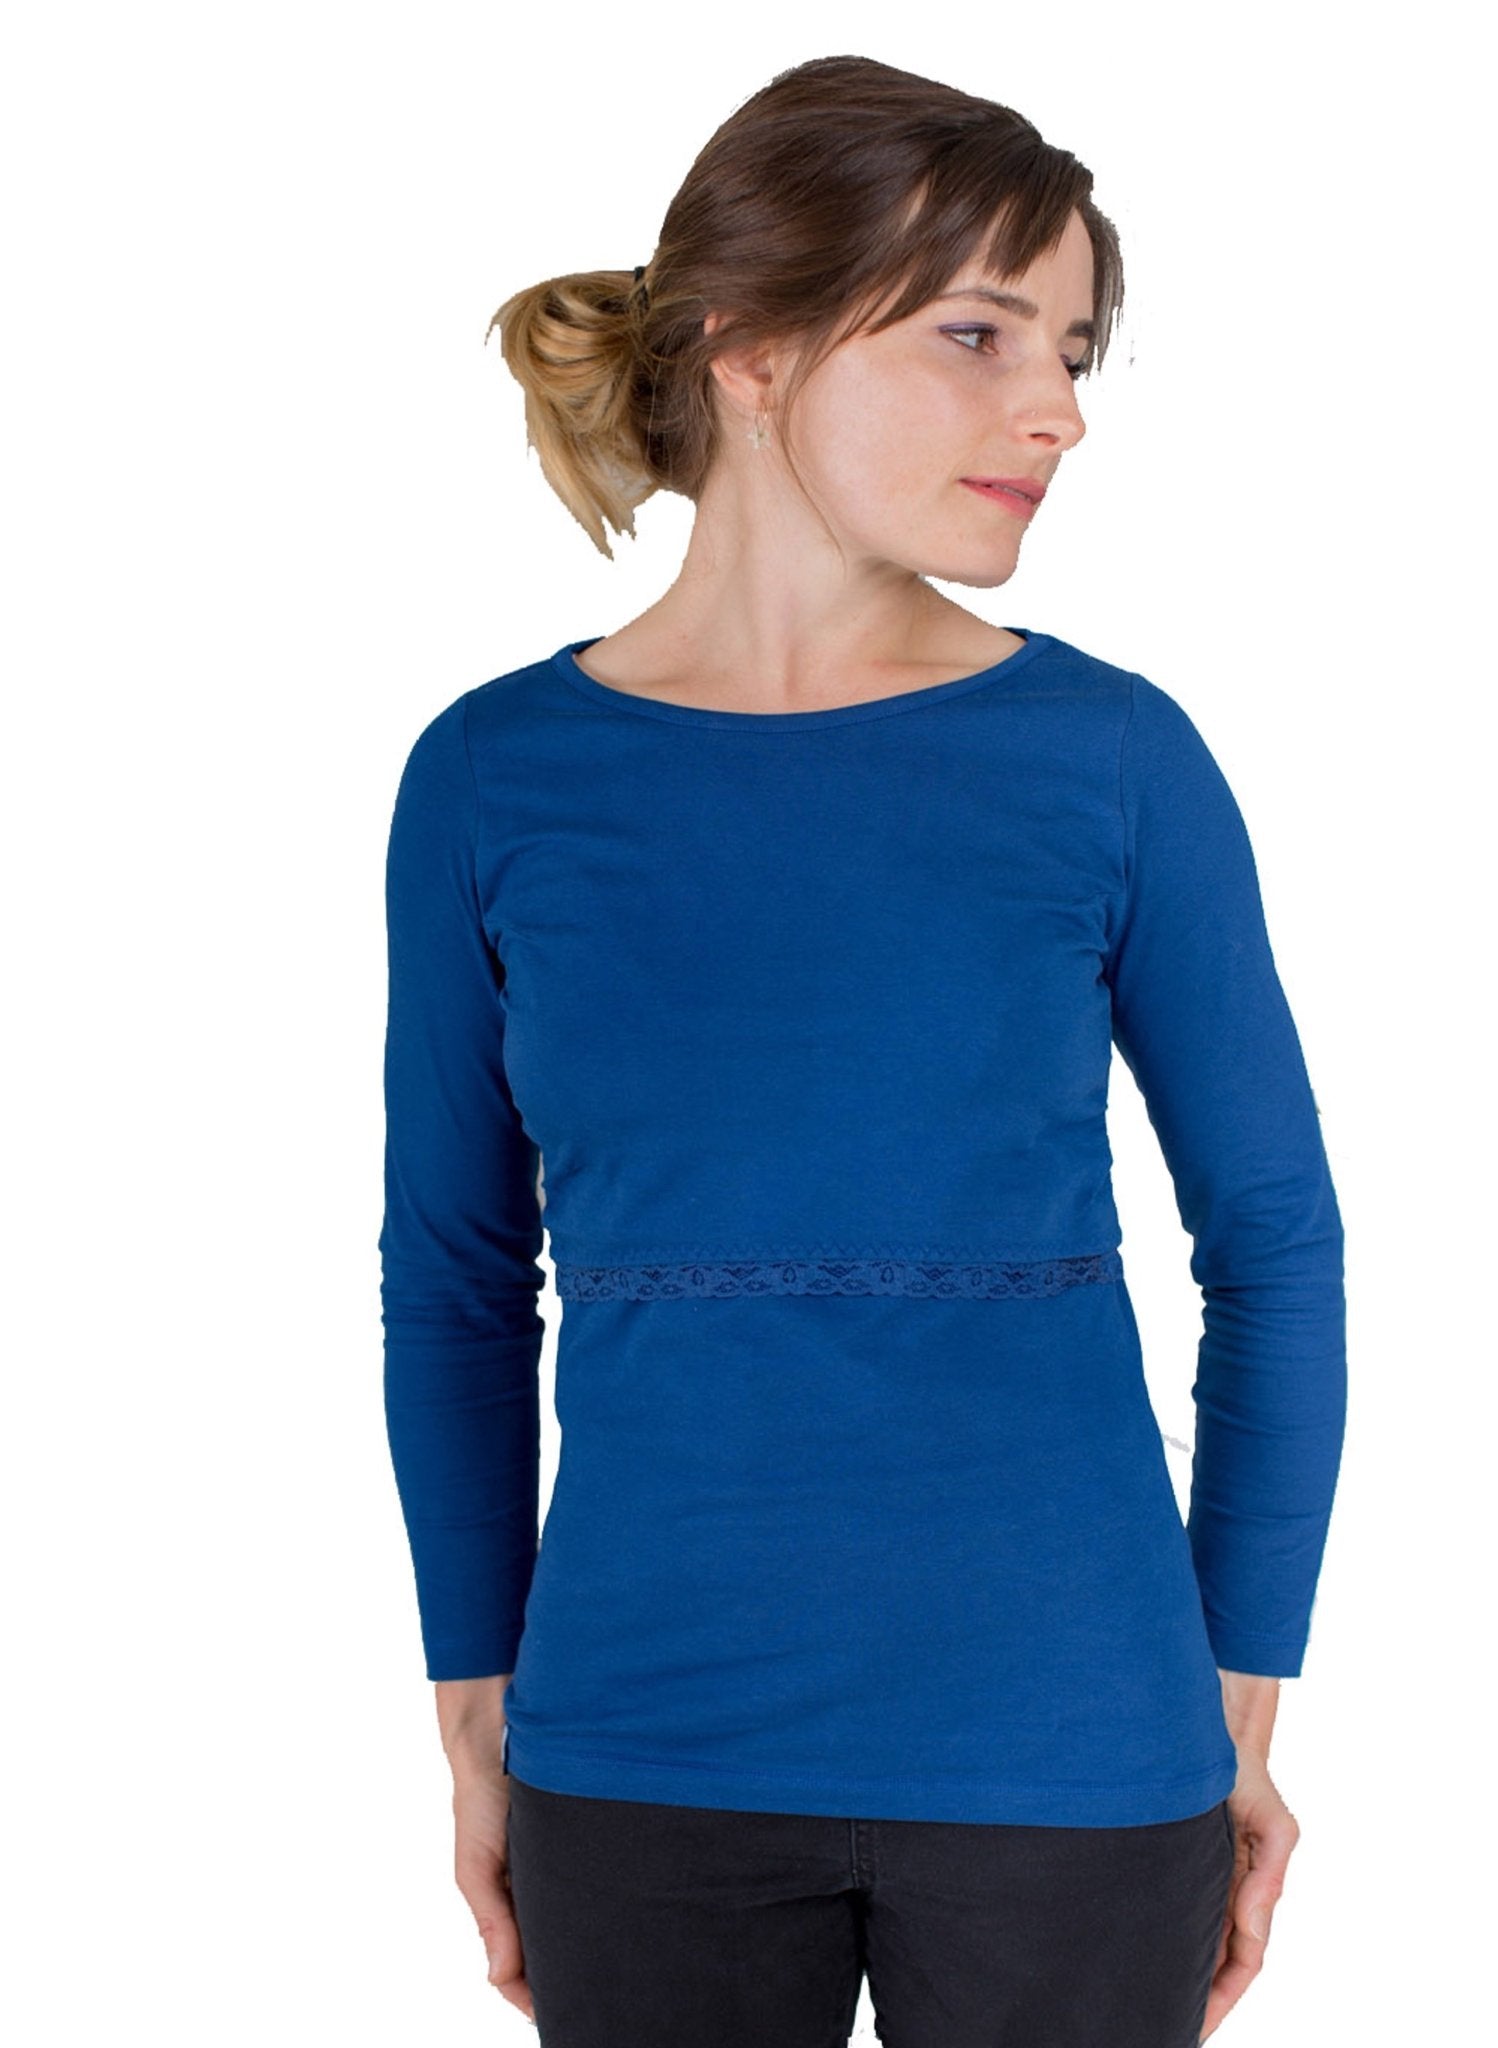 Long Sleeves Breastfeeding Shirt - Blue - Mums and Bumps